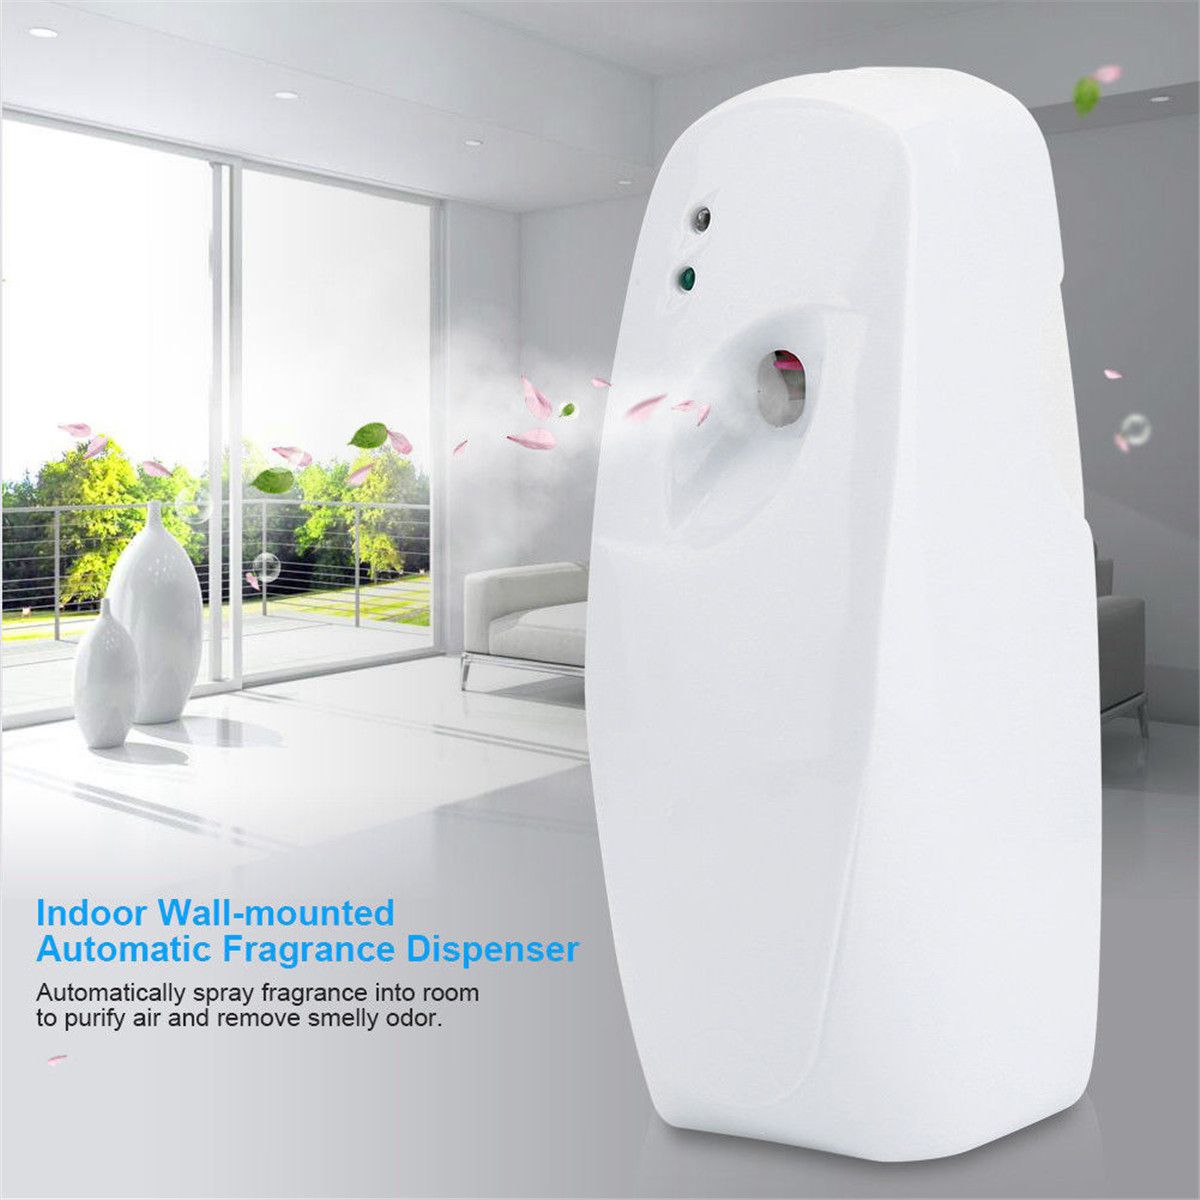 Wall-mounted-Automatic-Perfume-Air-Freshener-Aerosol-Dispenser-Sprayer-Indoor-1545824